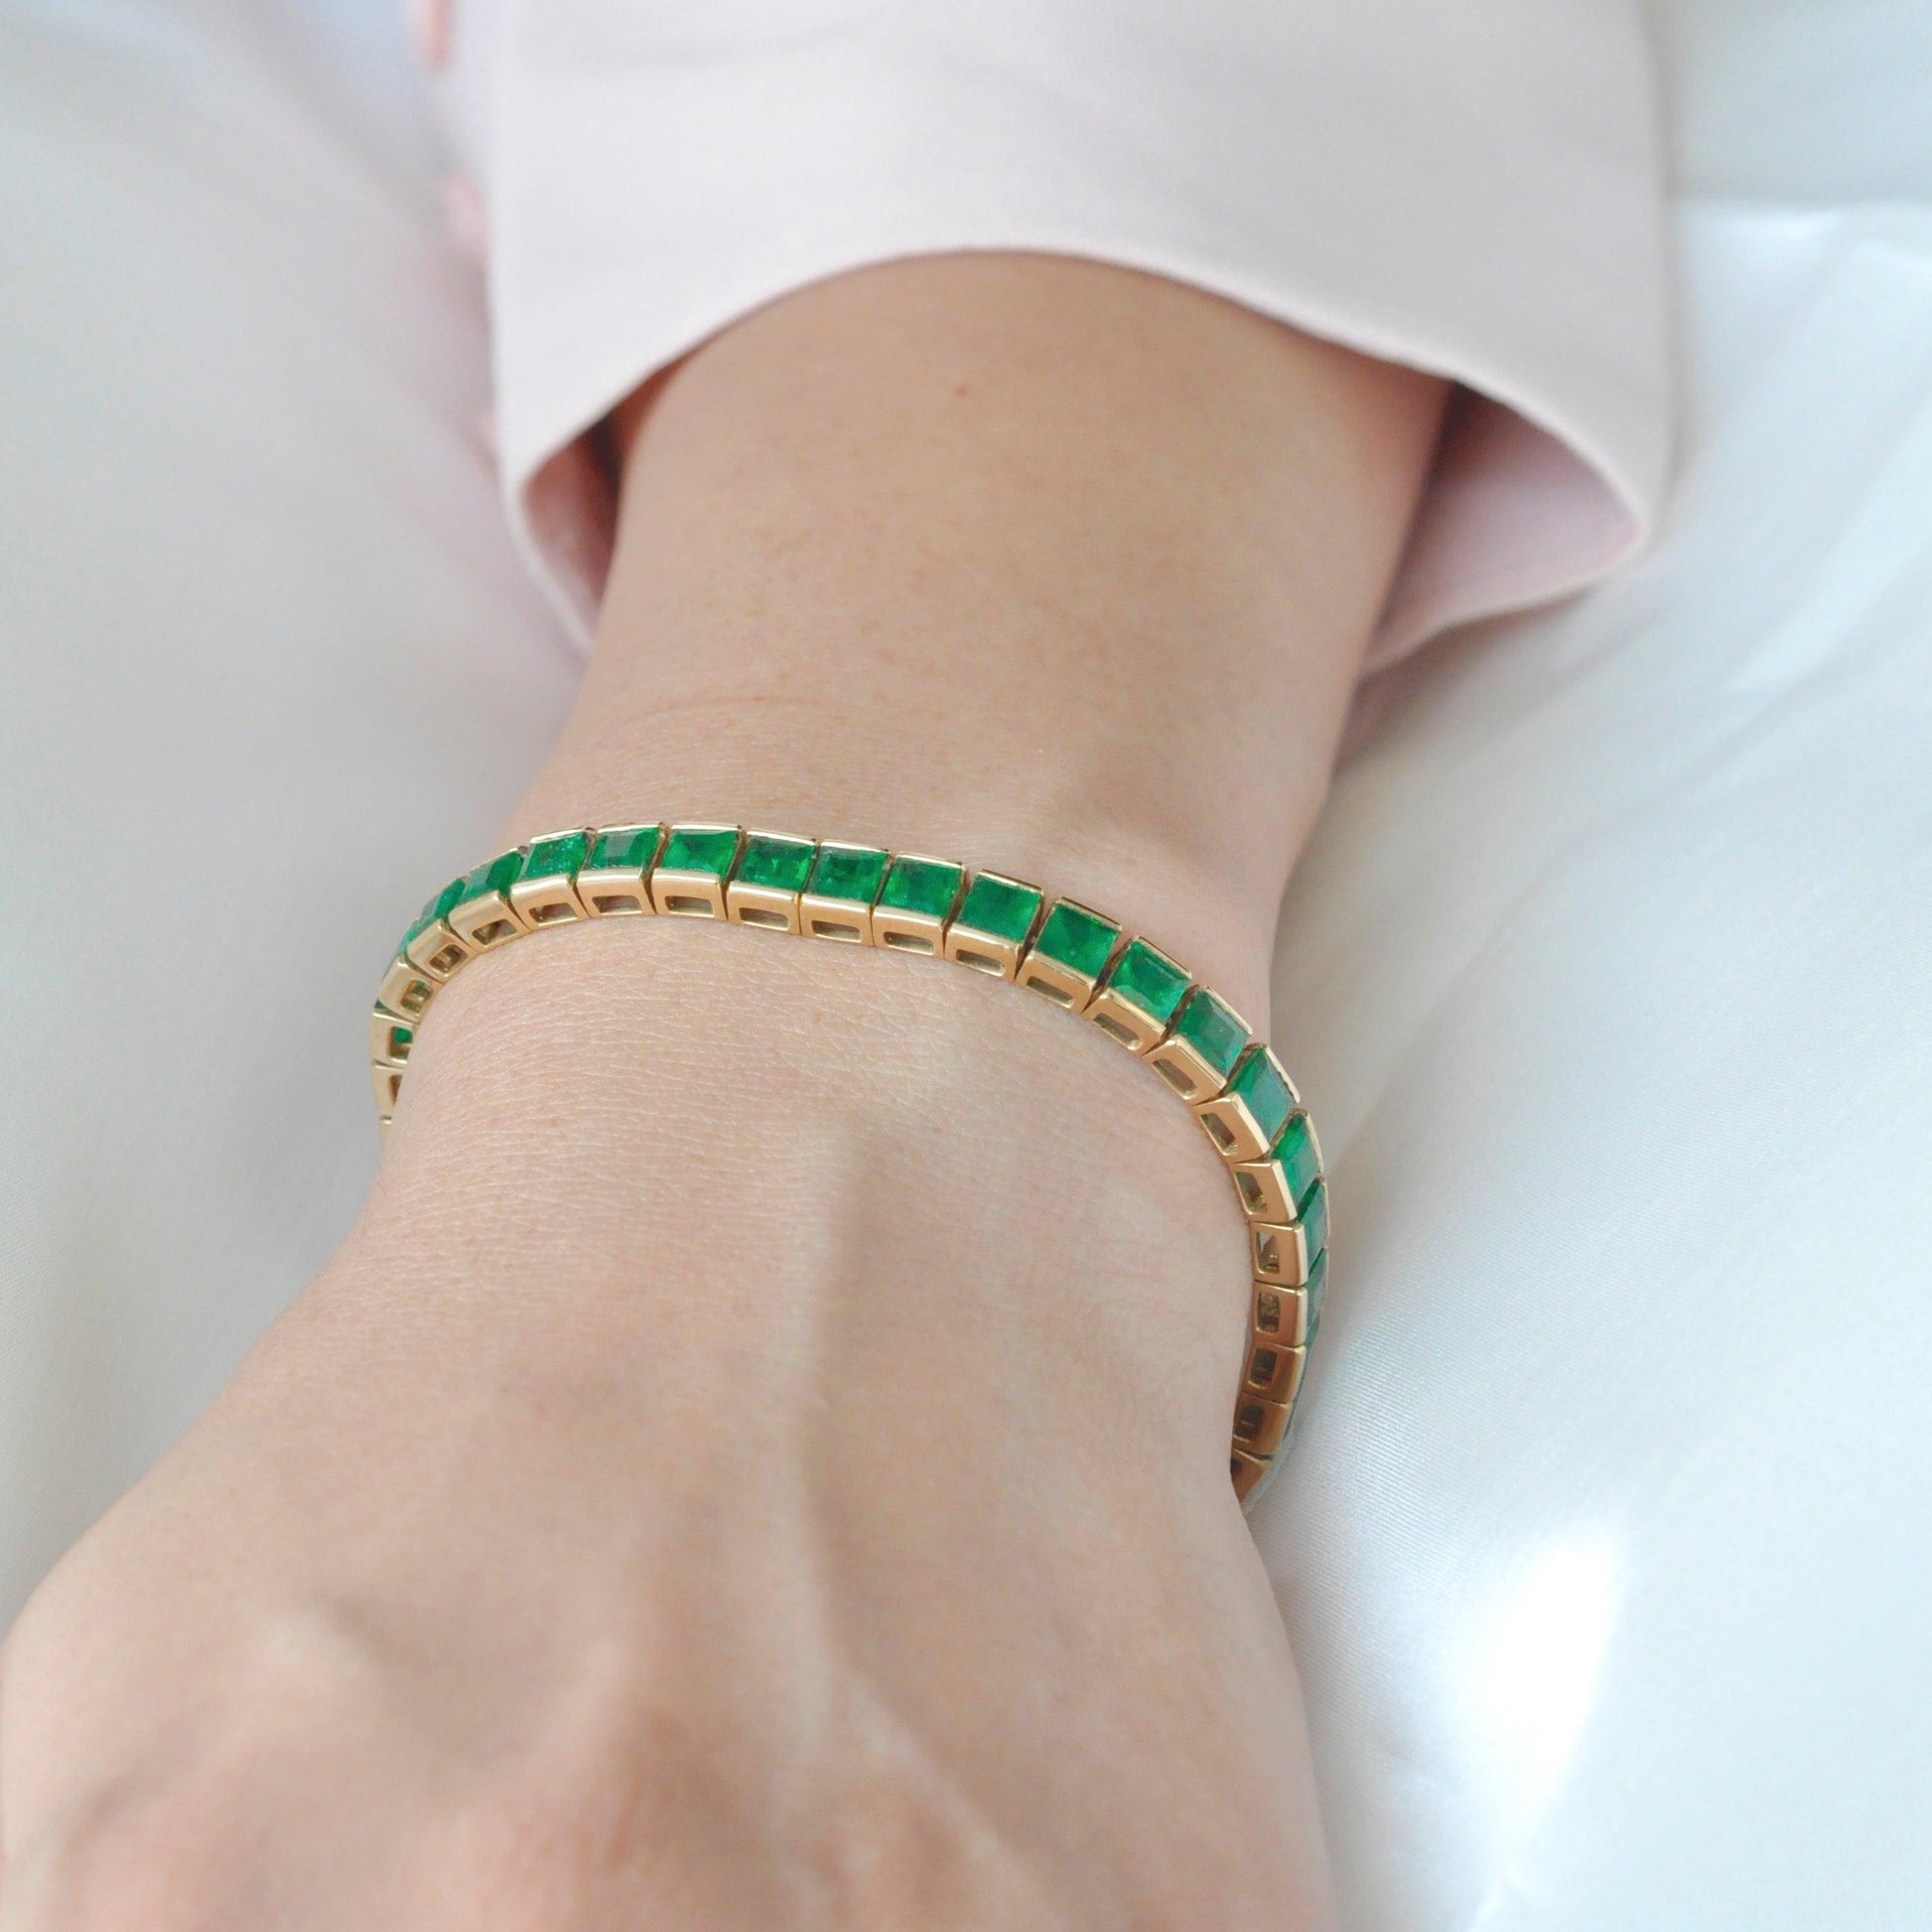 18K Gold Square Brazilian Emerald Tennis Bracelet - Vaibhav Dhadda Jewellery